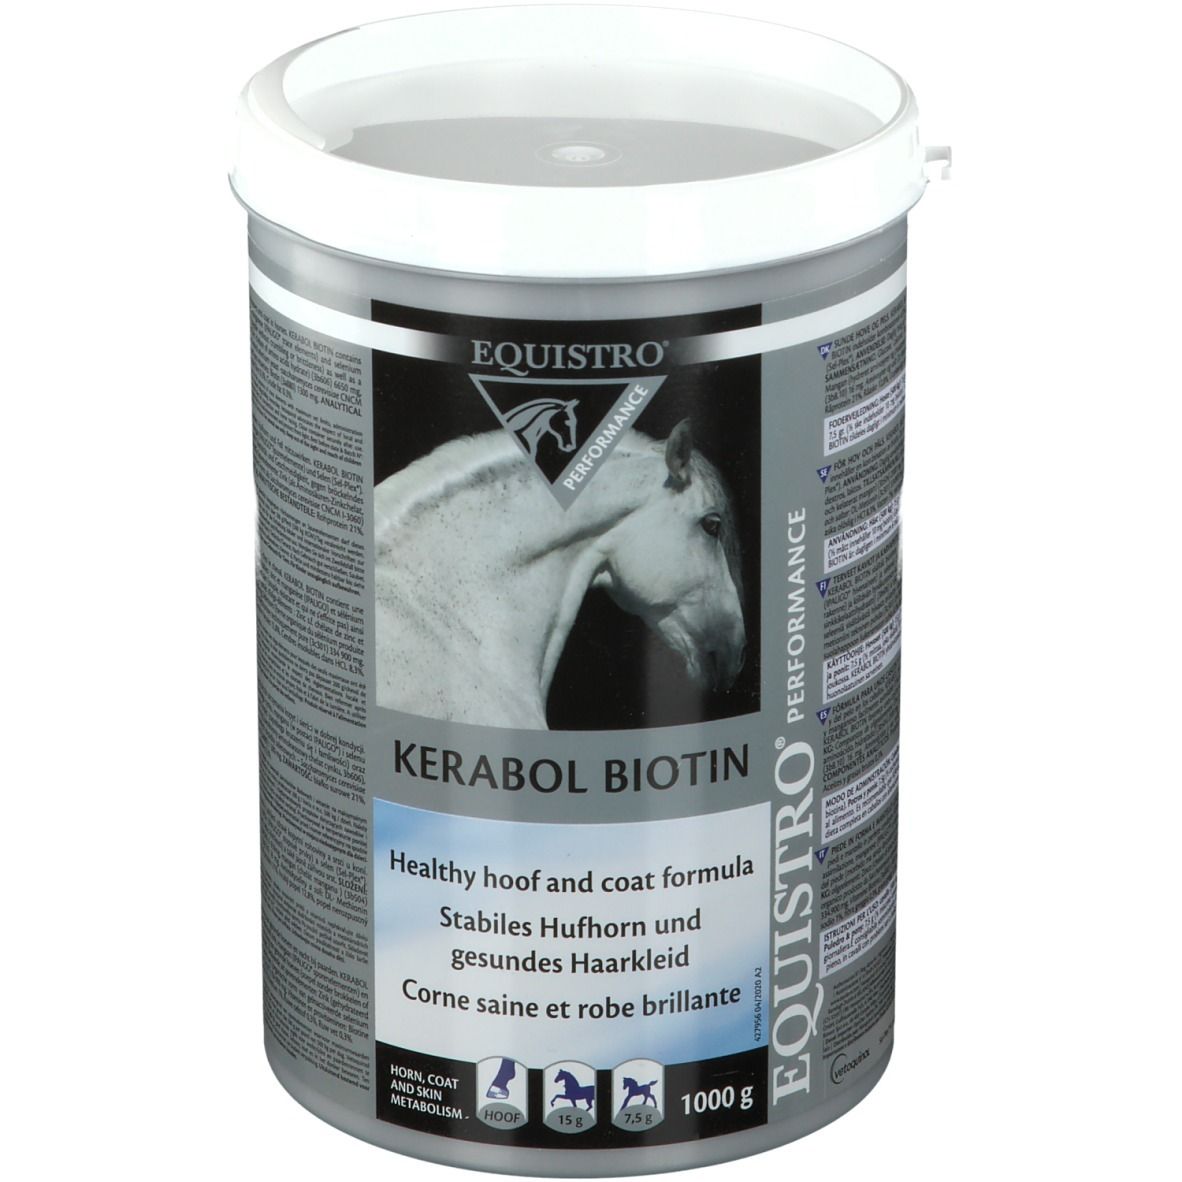 EQUISTRO® Kerabol Biotin